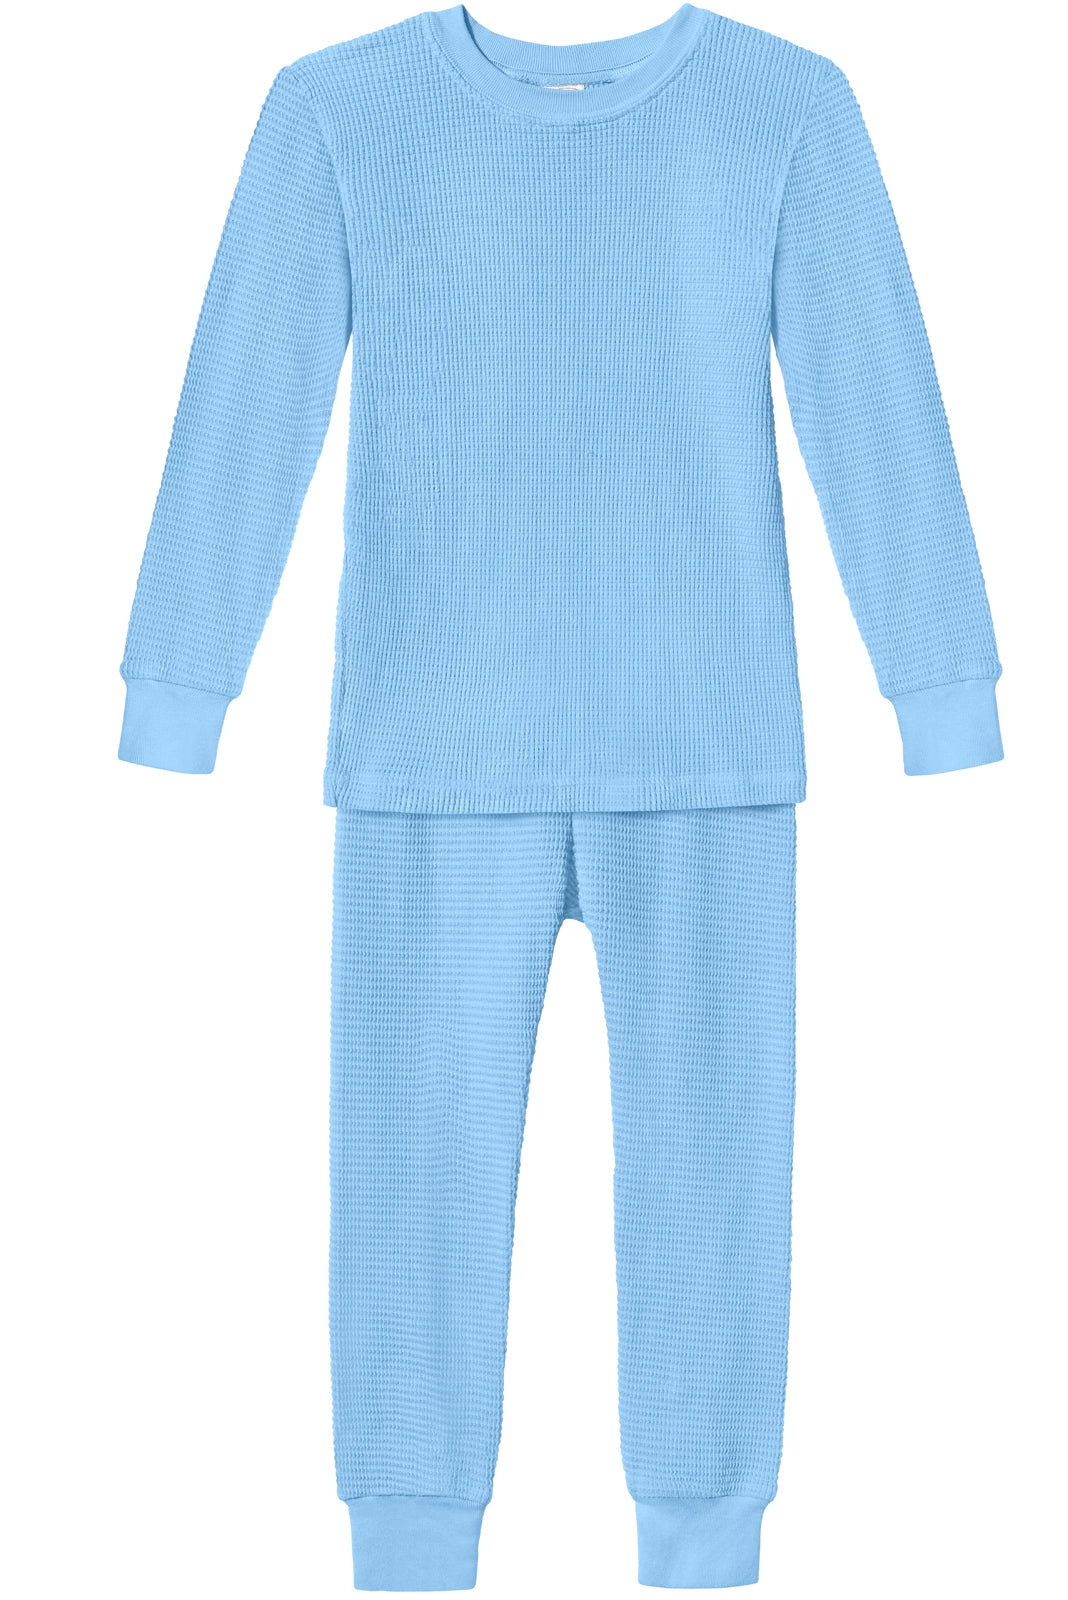 Buy online Blue Cotton Sets Thermals & Inner Wear from winter wear